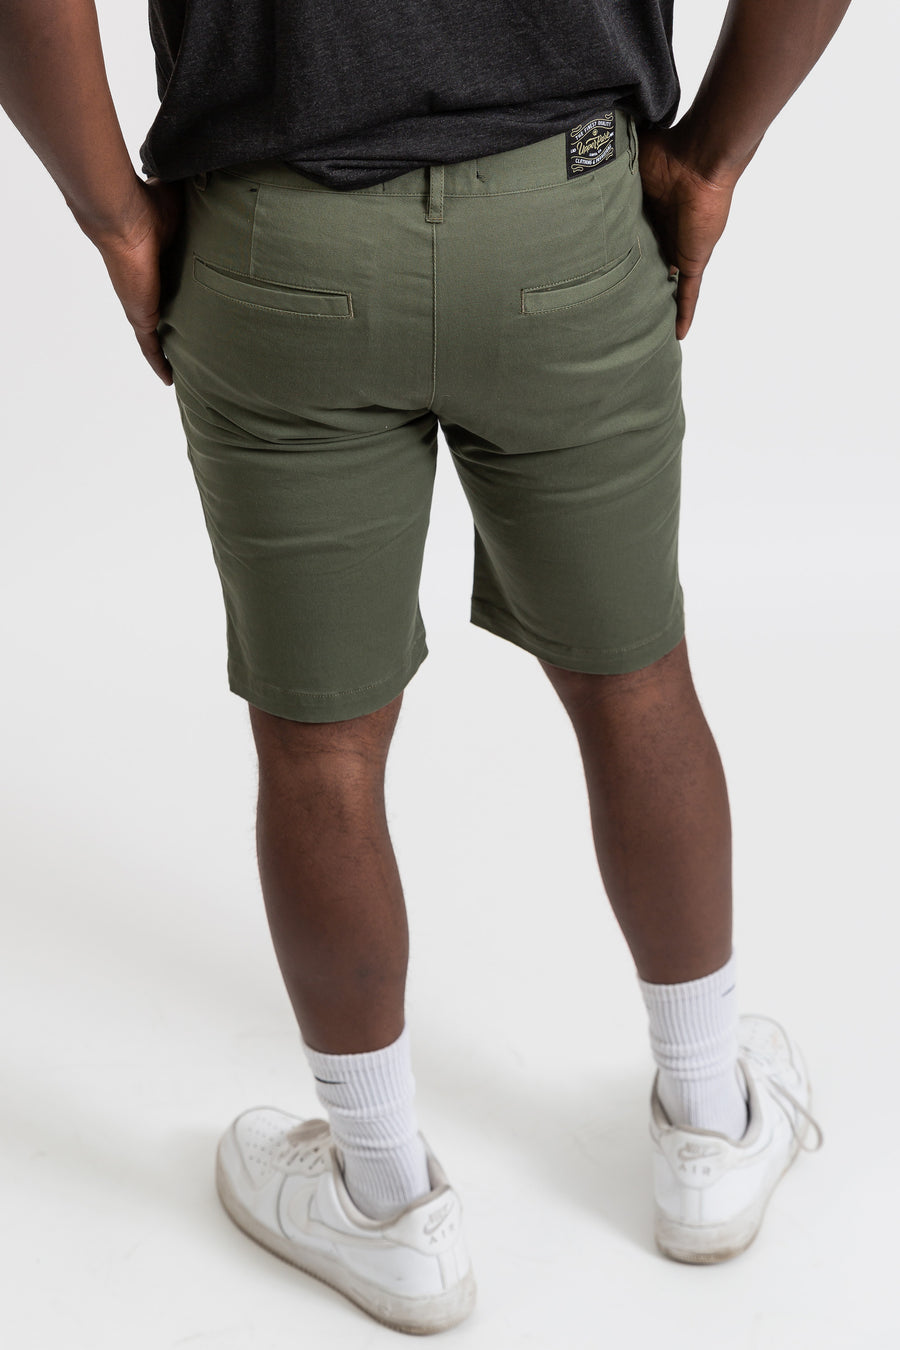 Men's Plain Shorts - Army